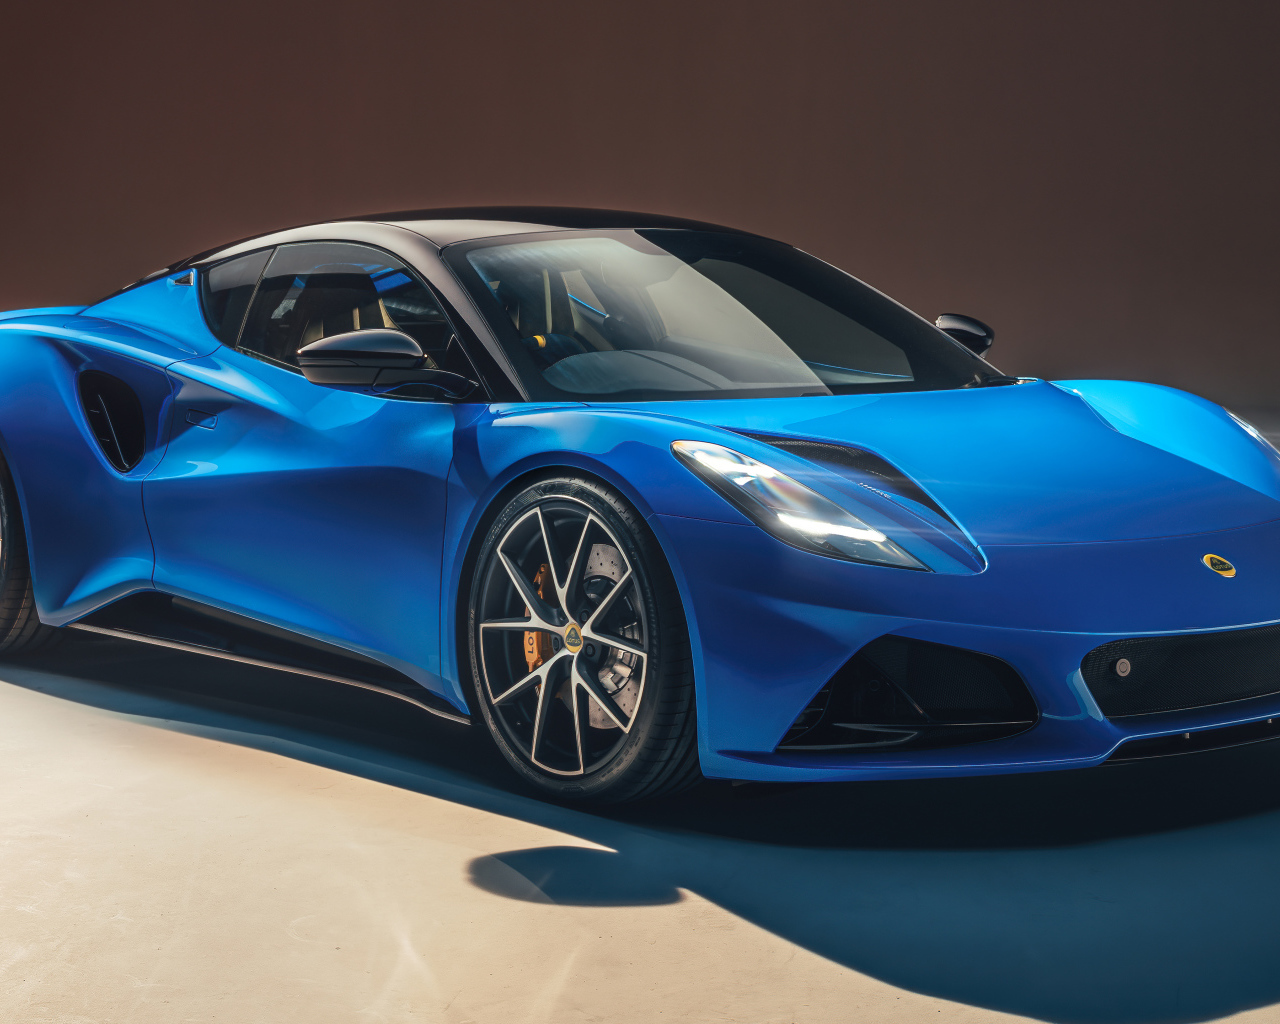 Голубой автомобиль Lotus Emira First Edition 2021 года